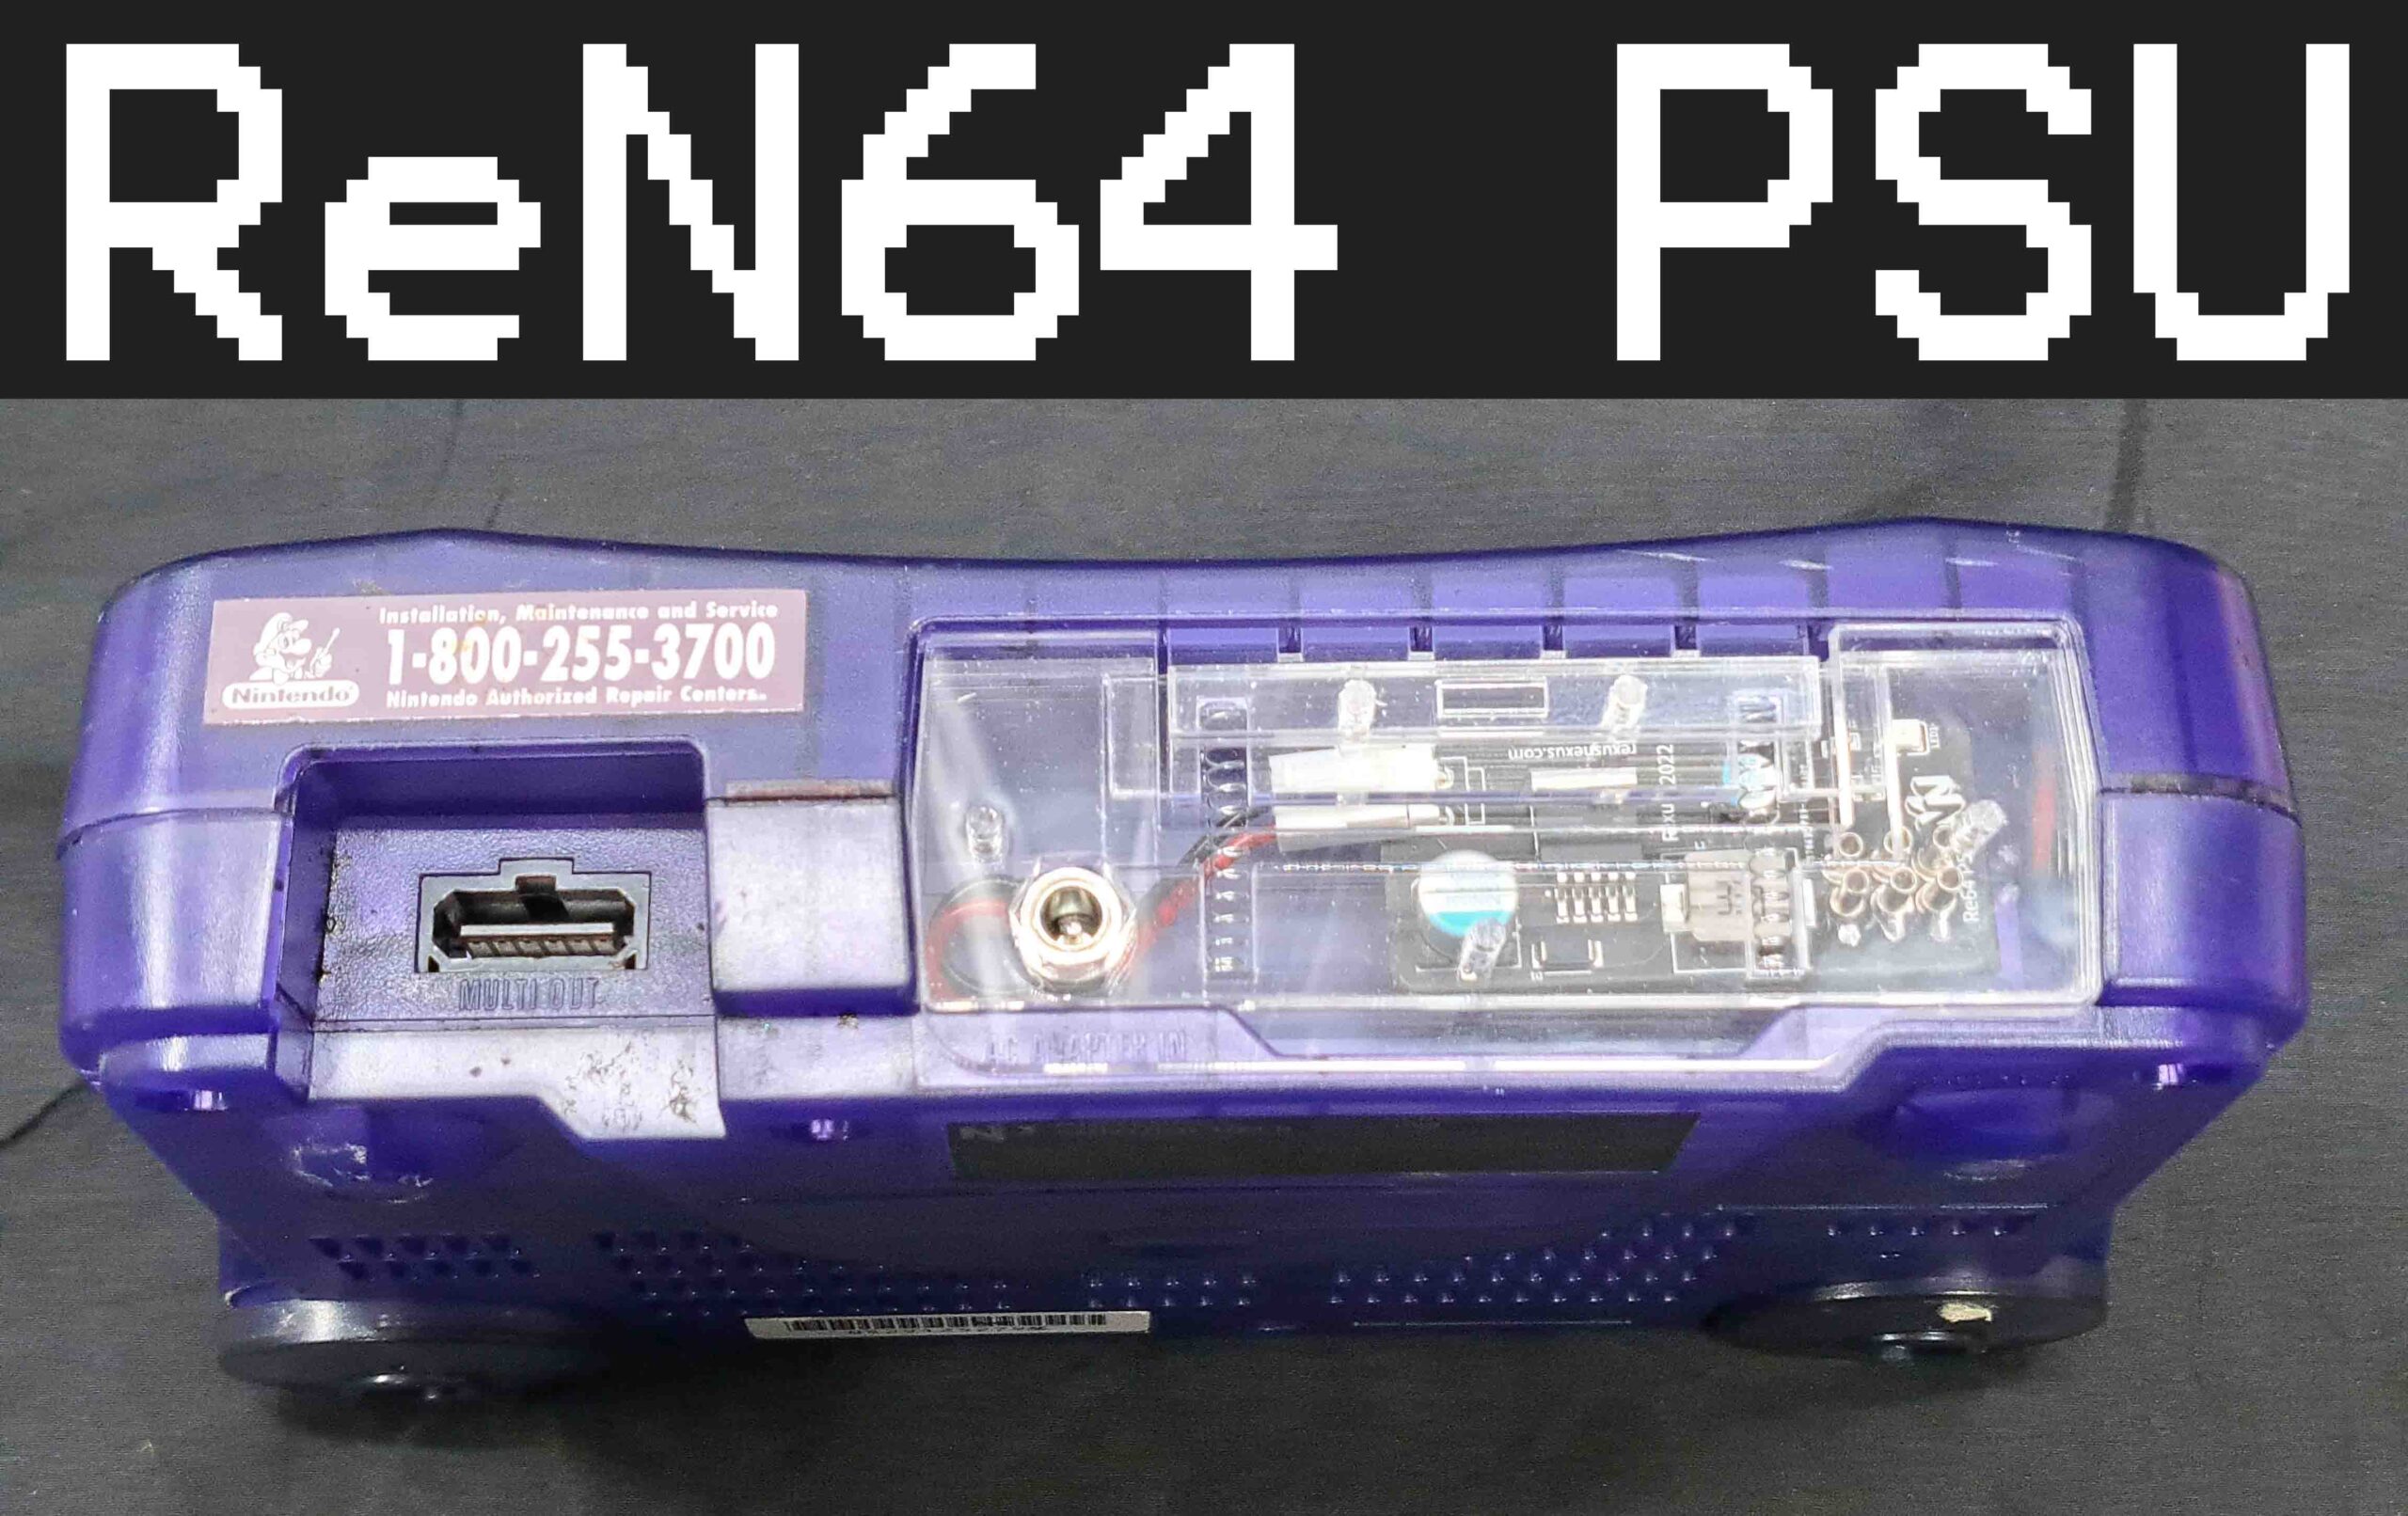 PSU for Nintendo 64 | Game-Tech.us